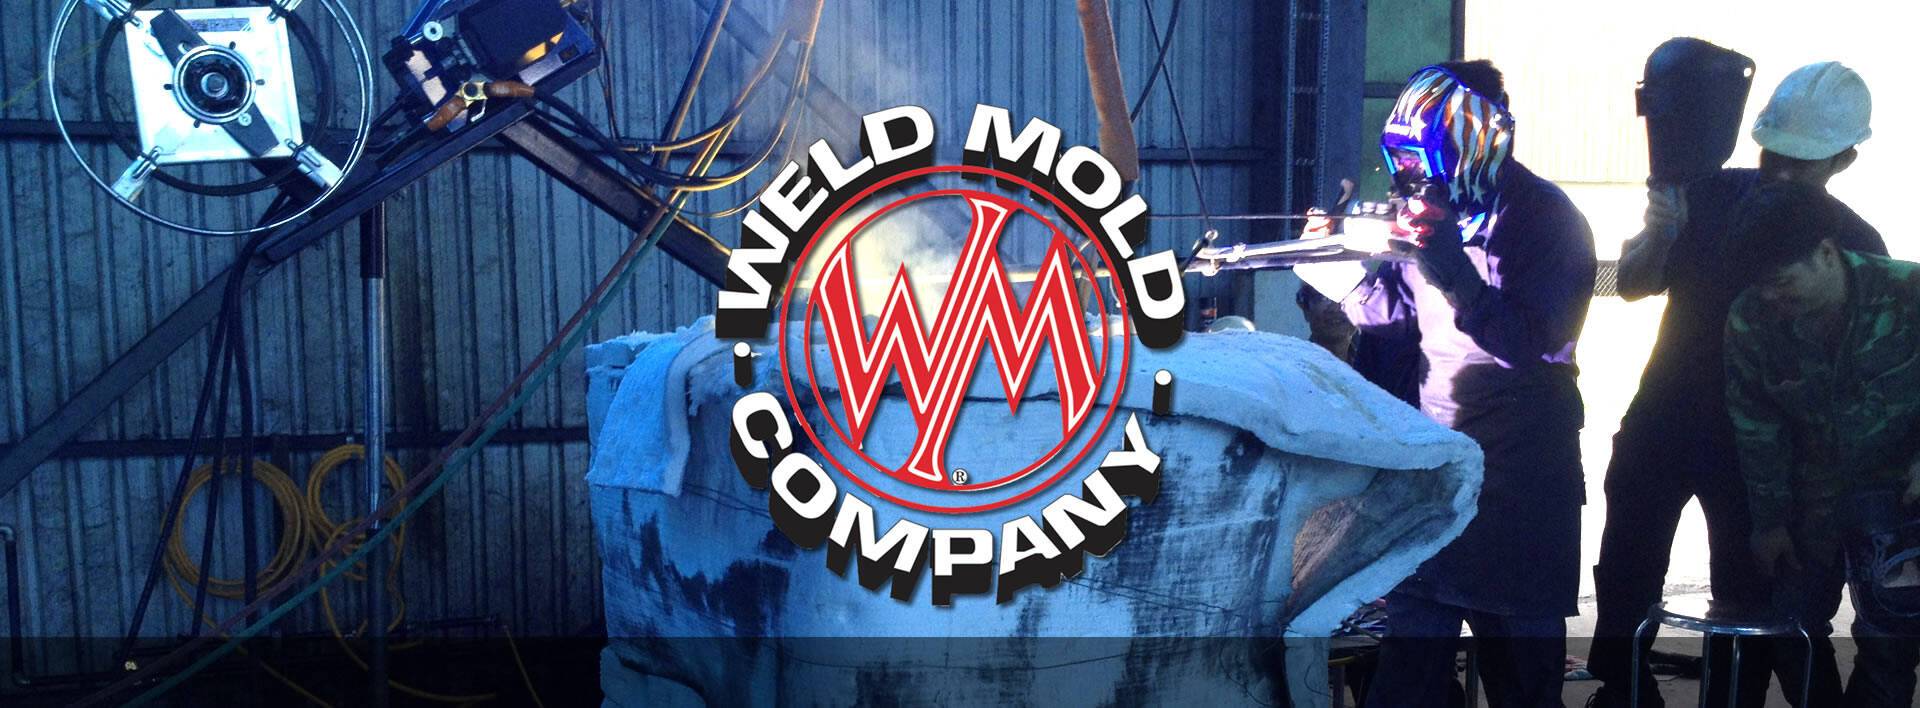 Weld Mold Company